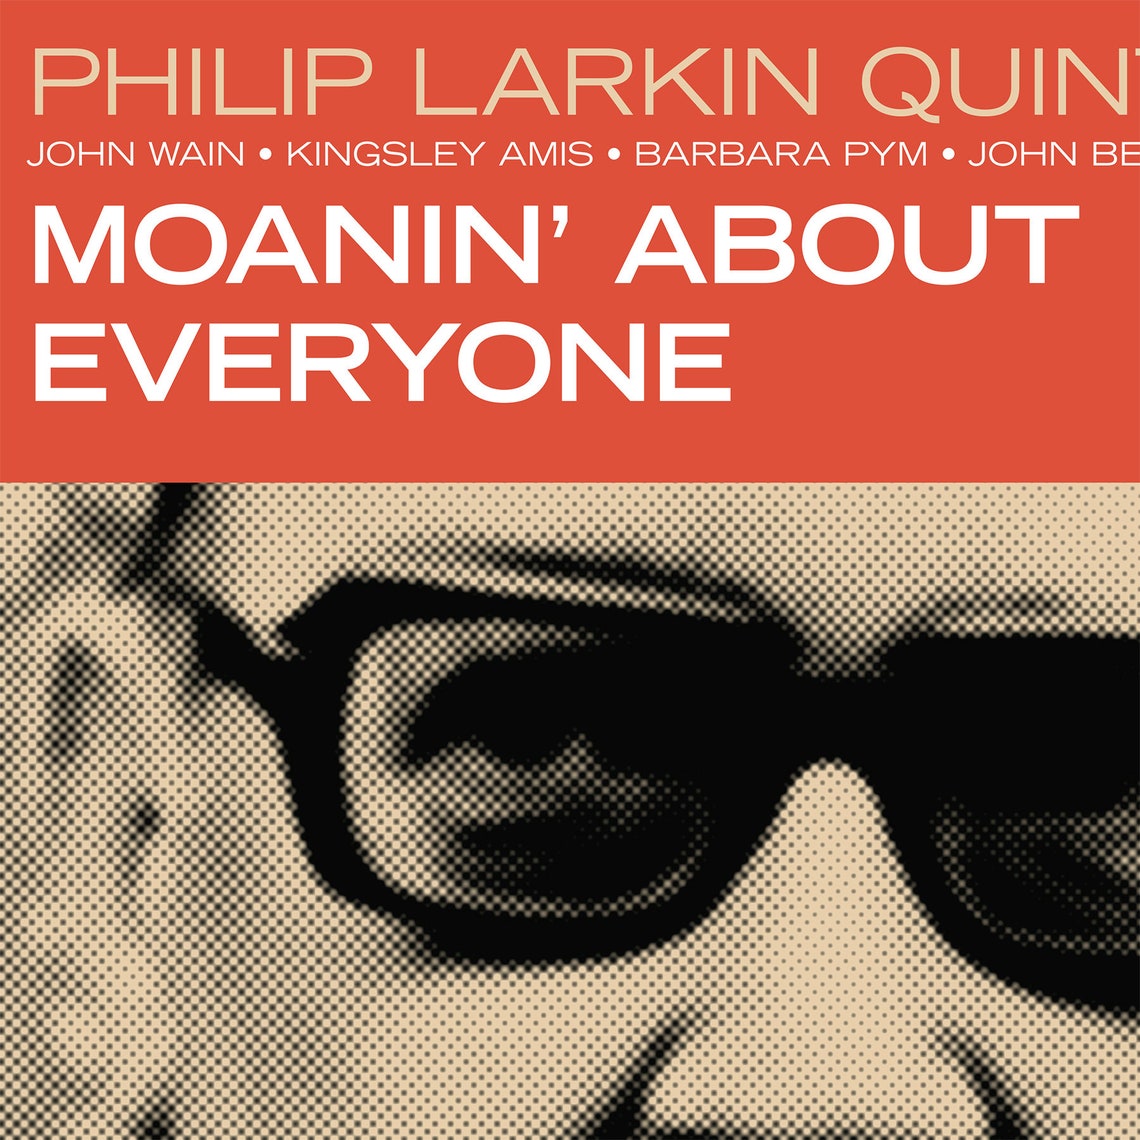 Philip Larkin Quintet Jazz Album Cover Poster Great Writer - Etsy